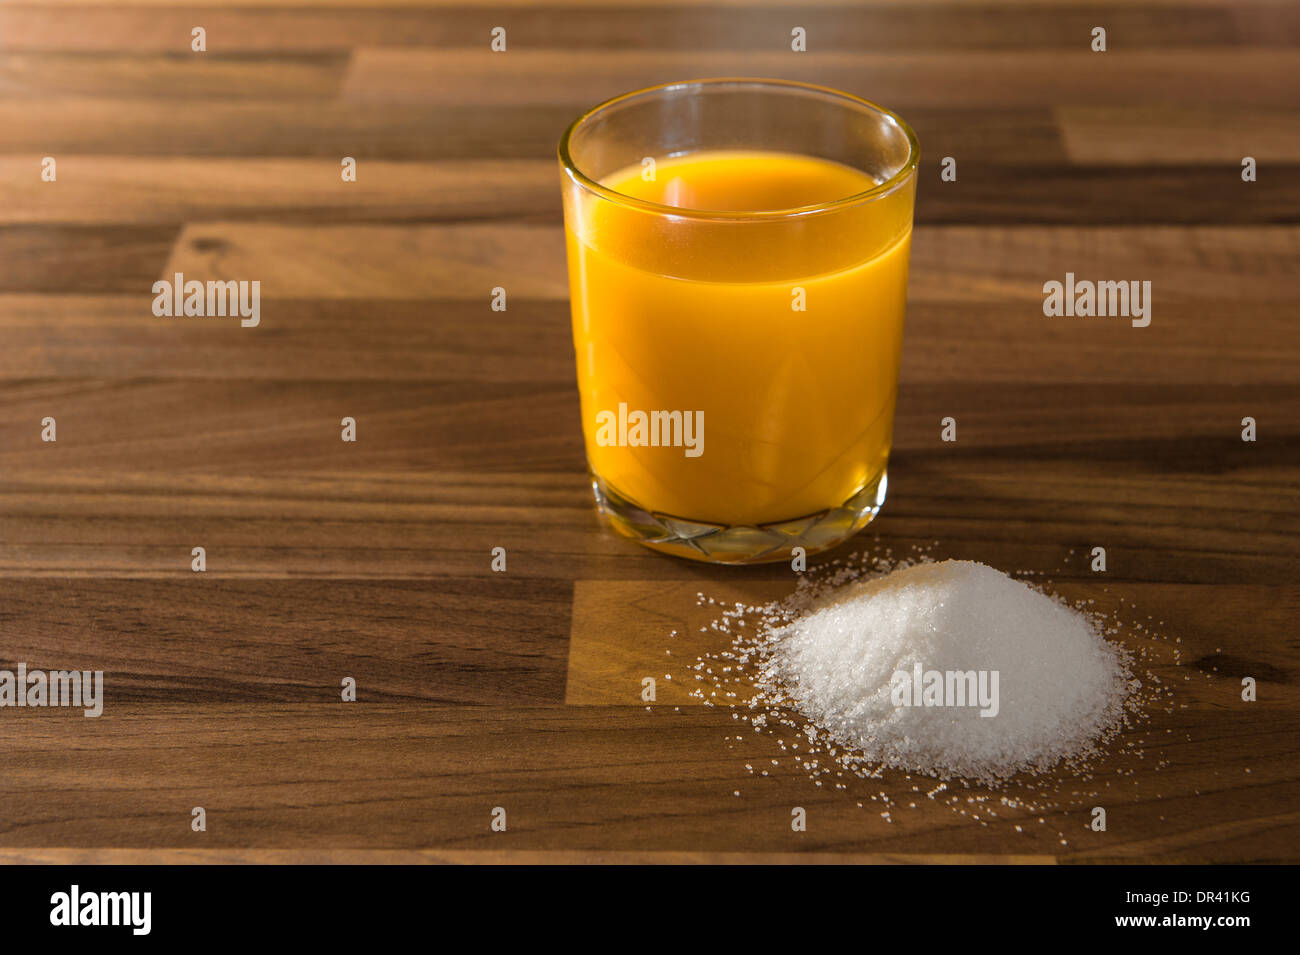 Succo di arancia e zucchero, elevati quantitativi di zucchero nei succhi di frutta. Foto Stock